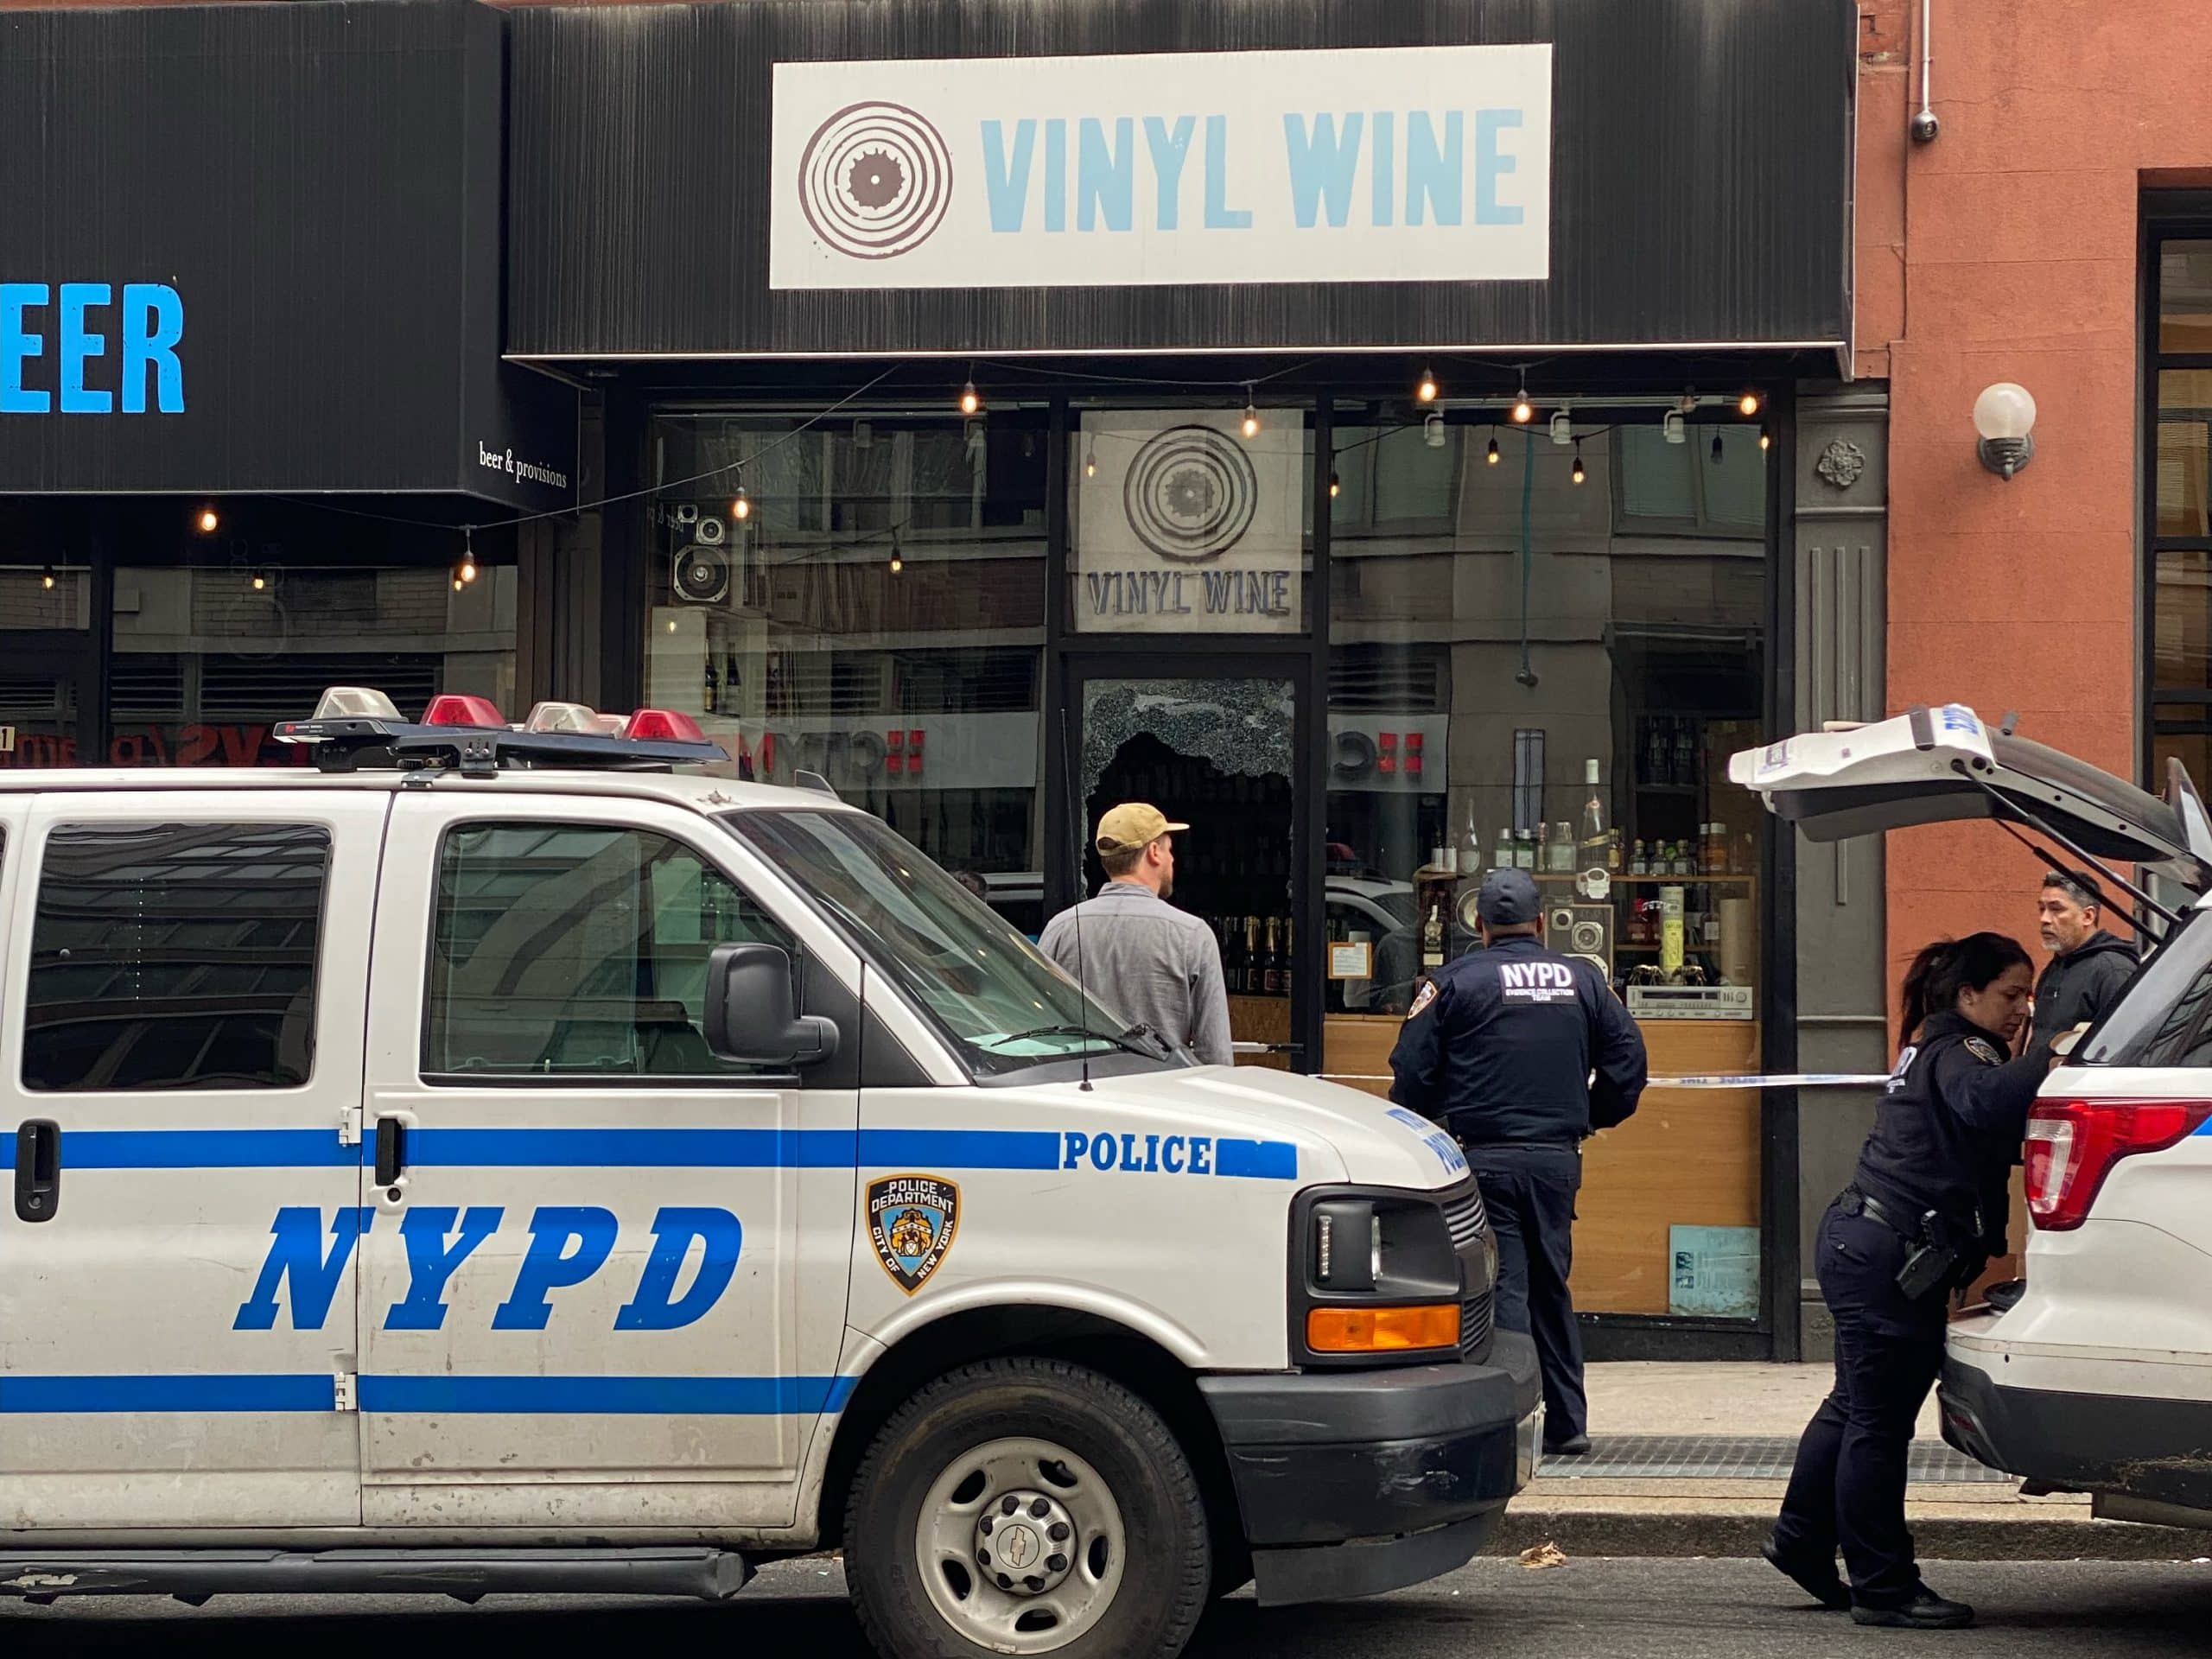 Vinyl Wine, located at 1491 Lexington Avenue, was burglarized early Thursday morning